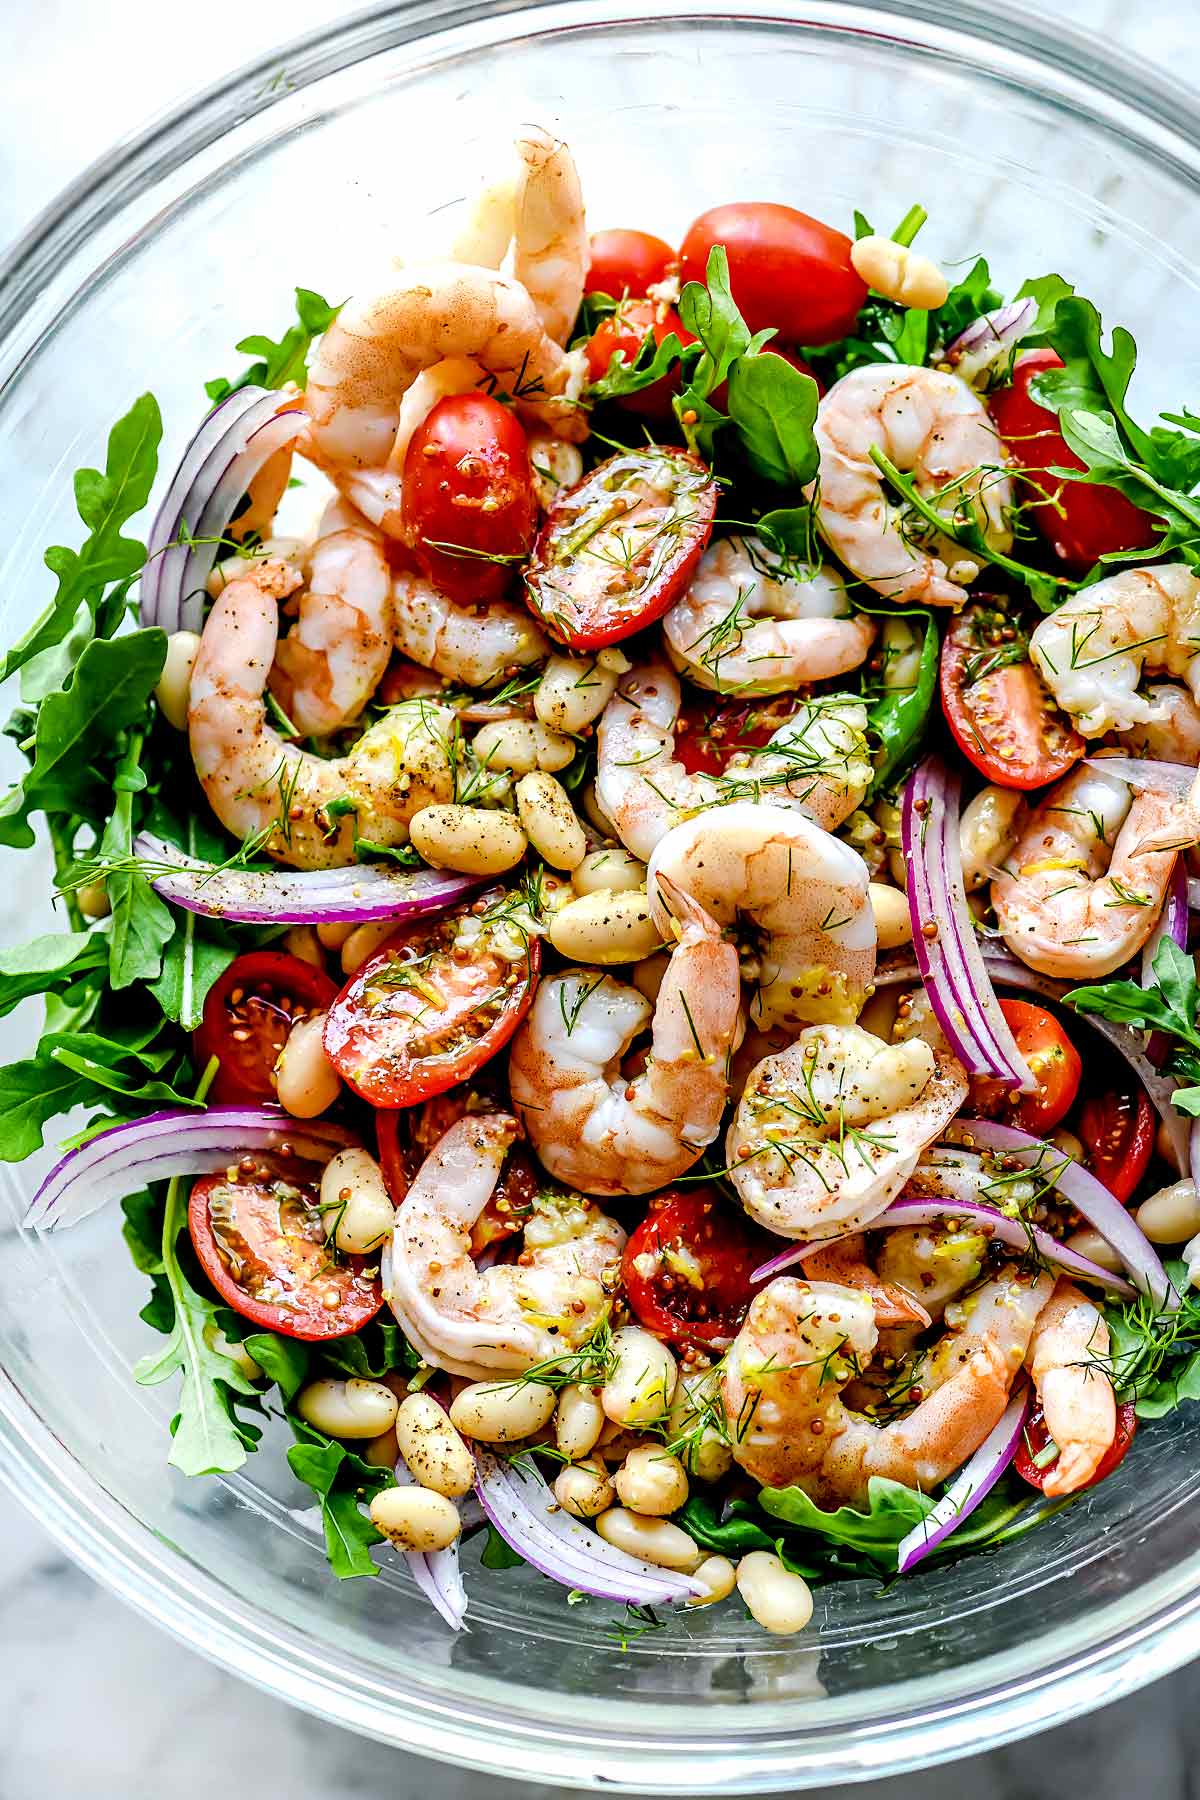 https://www.foodiecrush.com/wp-content/uploads/2021/05/Mediterranean-Shrimp-and-White-Bean-Salad-foodiecrush.com-009.jpg